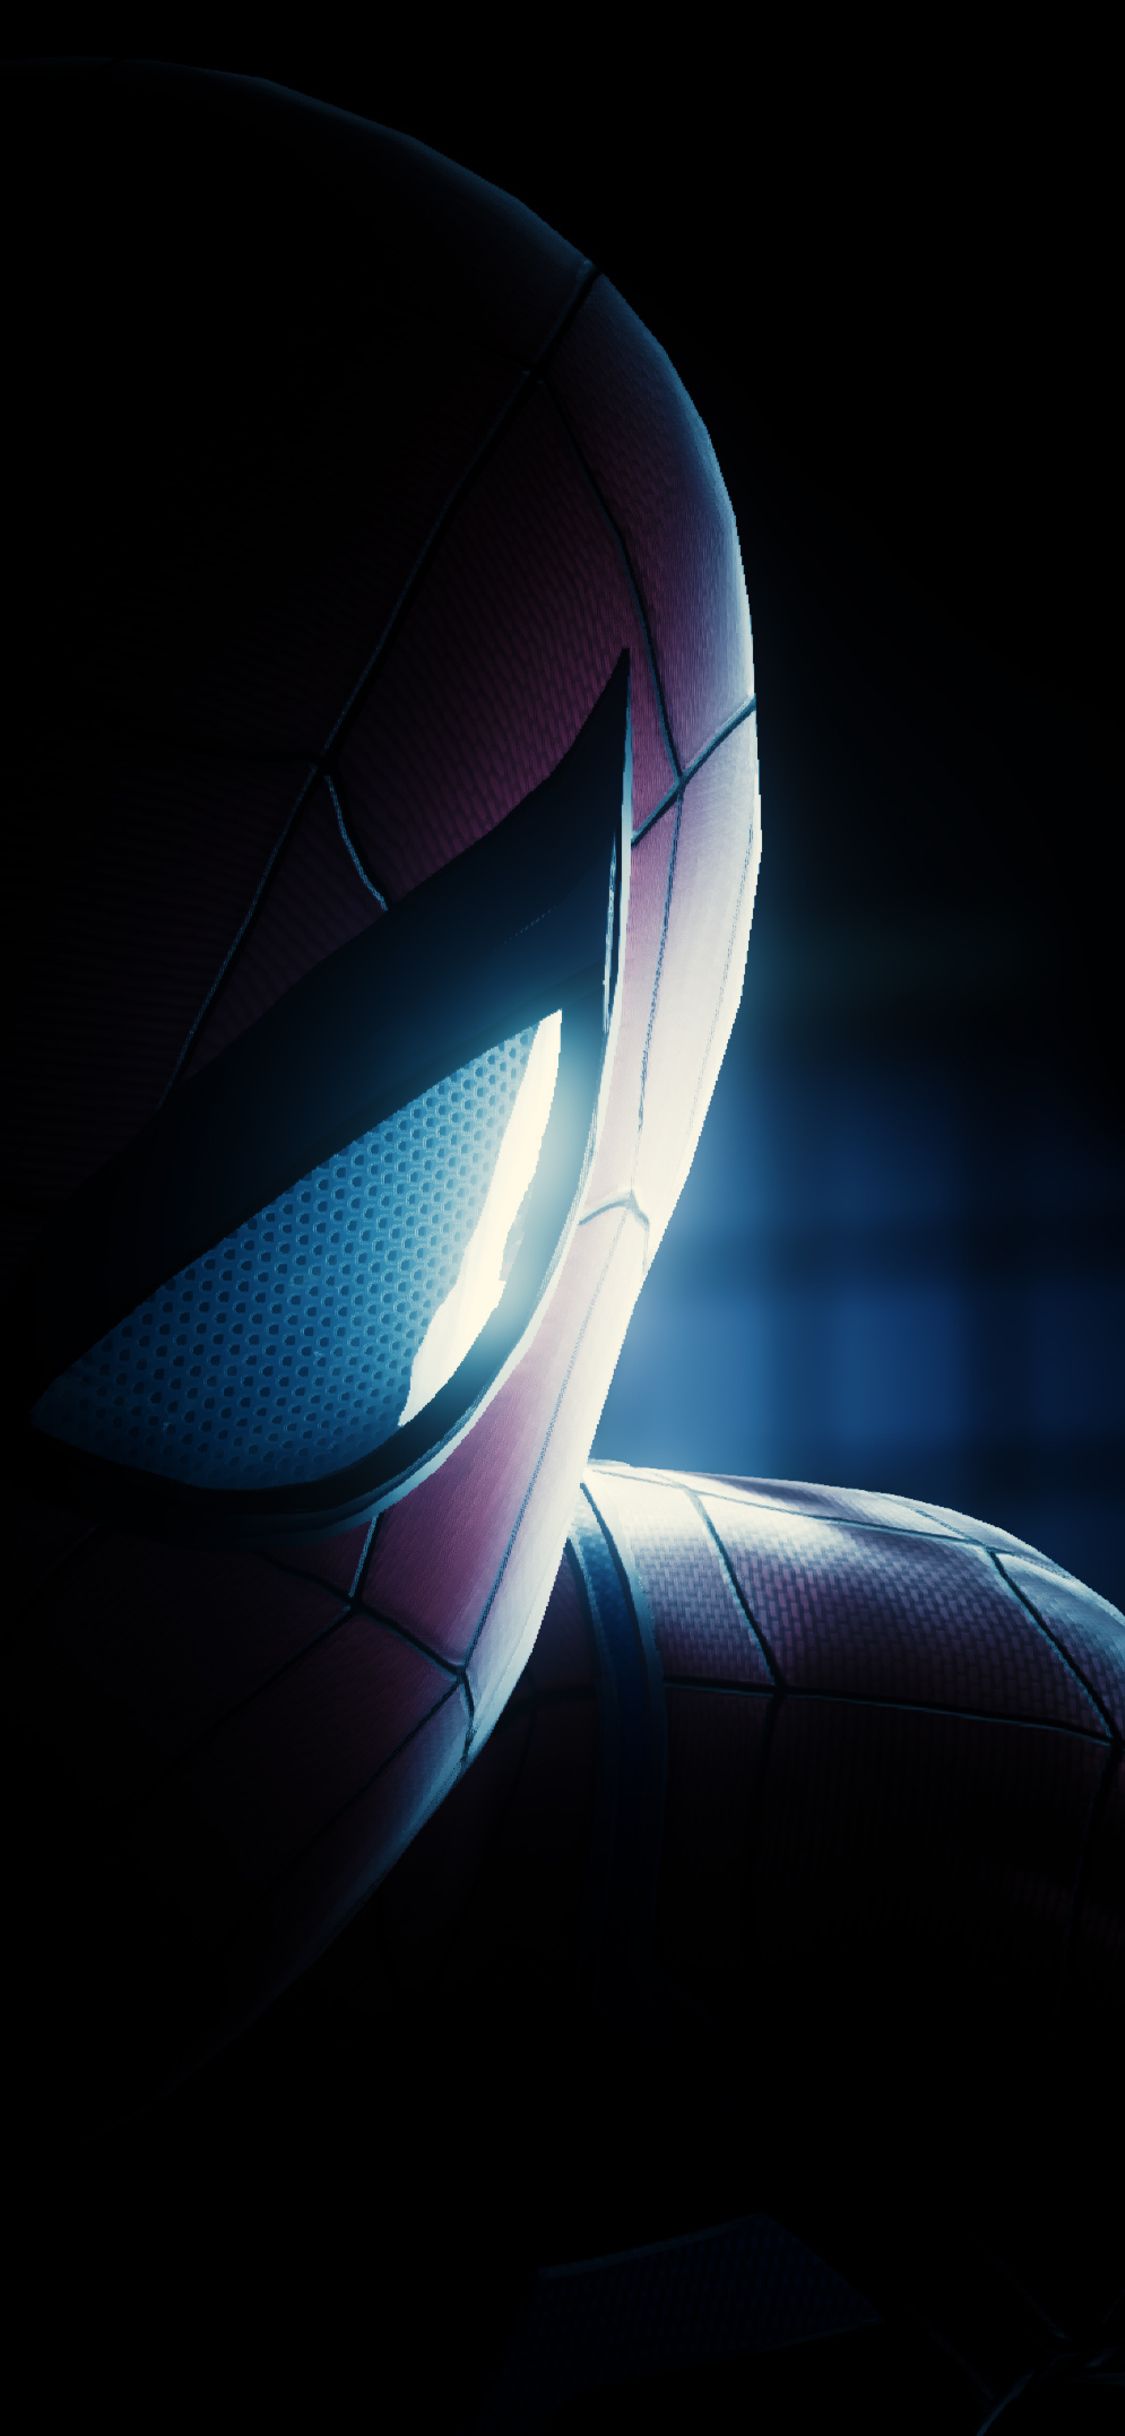 Spiderman Half Mask Face Closeup iPhone Xs